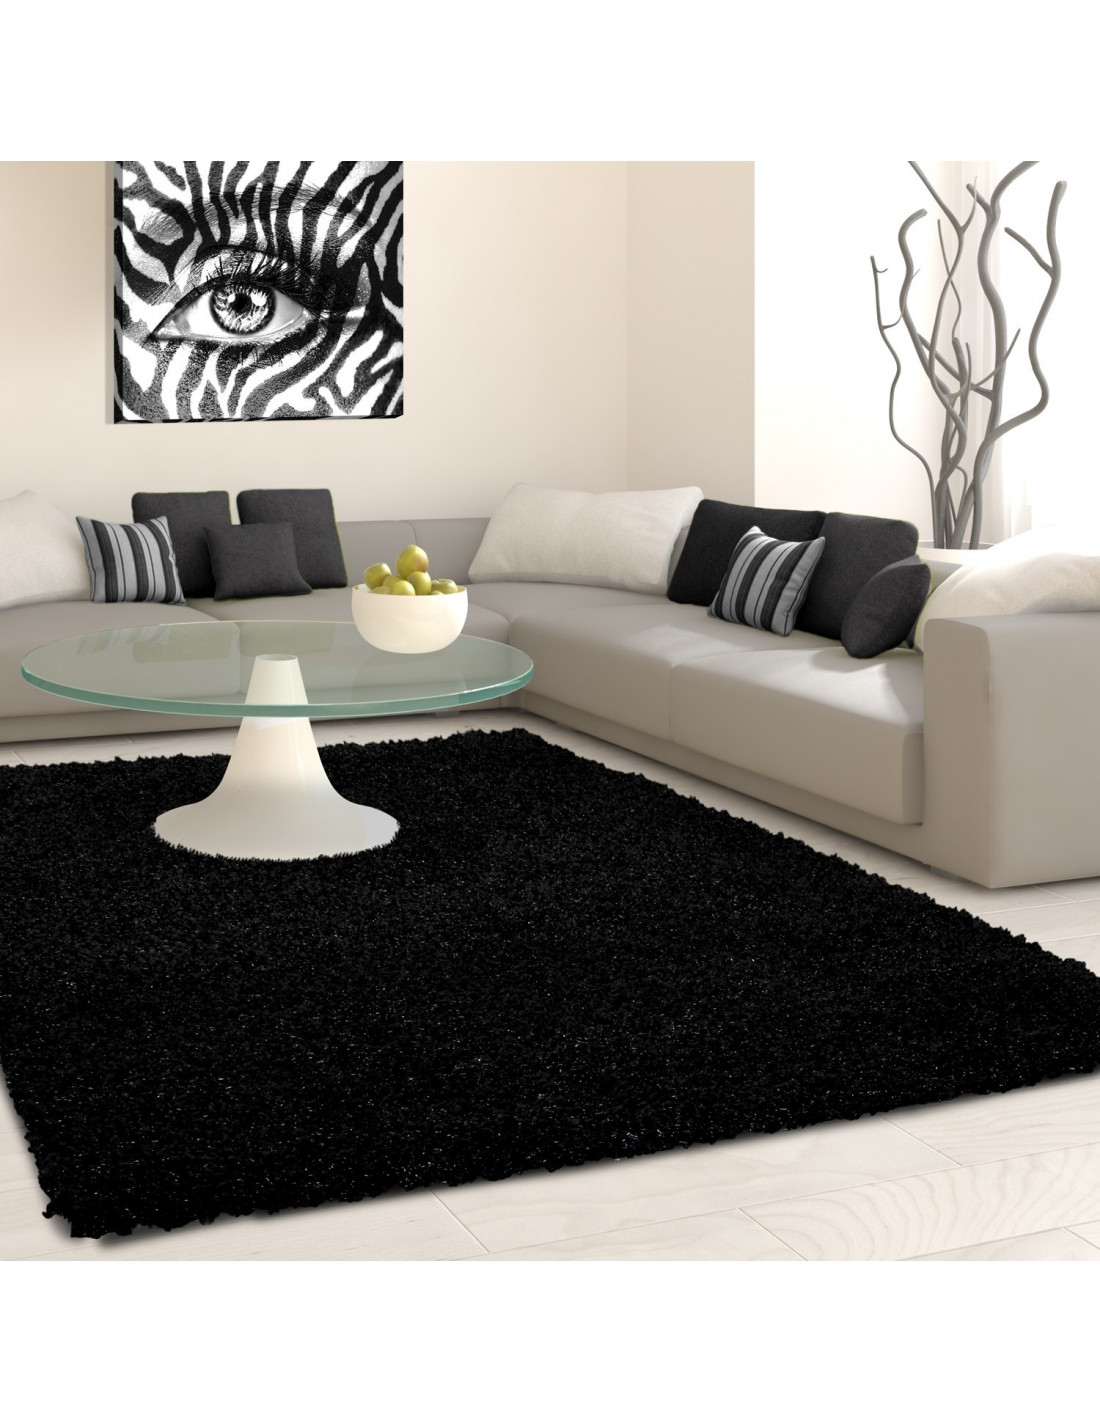 Shaggy carpet, high pile, long pile, living room shaggy, pile height 3cm, unicoloured anthracite